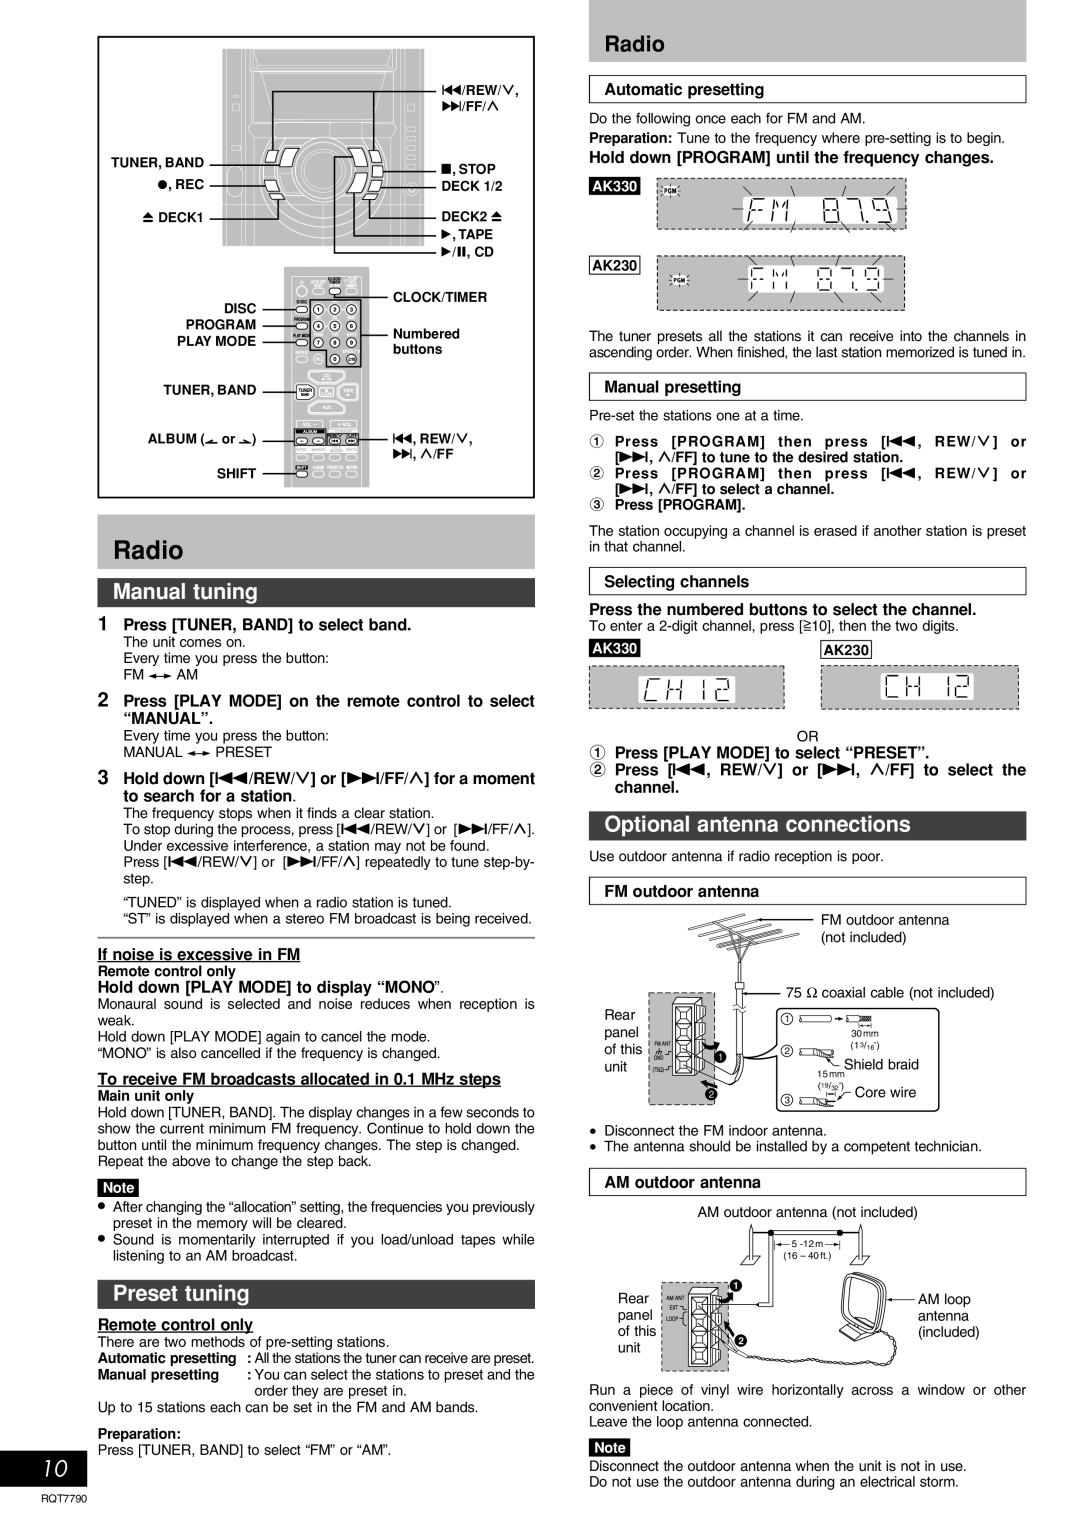 Panasonic SC-AK330 important safety instructions Radio, Manual tuning, Preset tuning, Optional antenna connections 